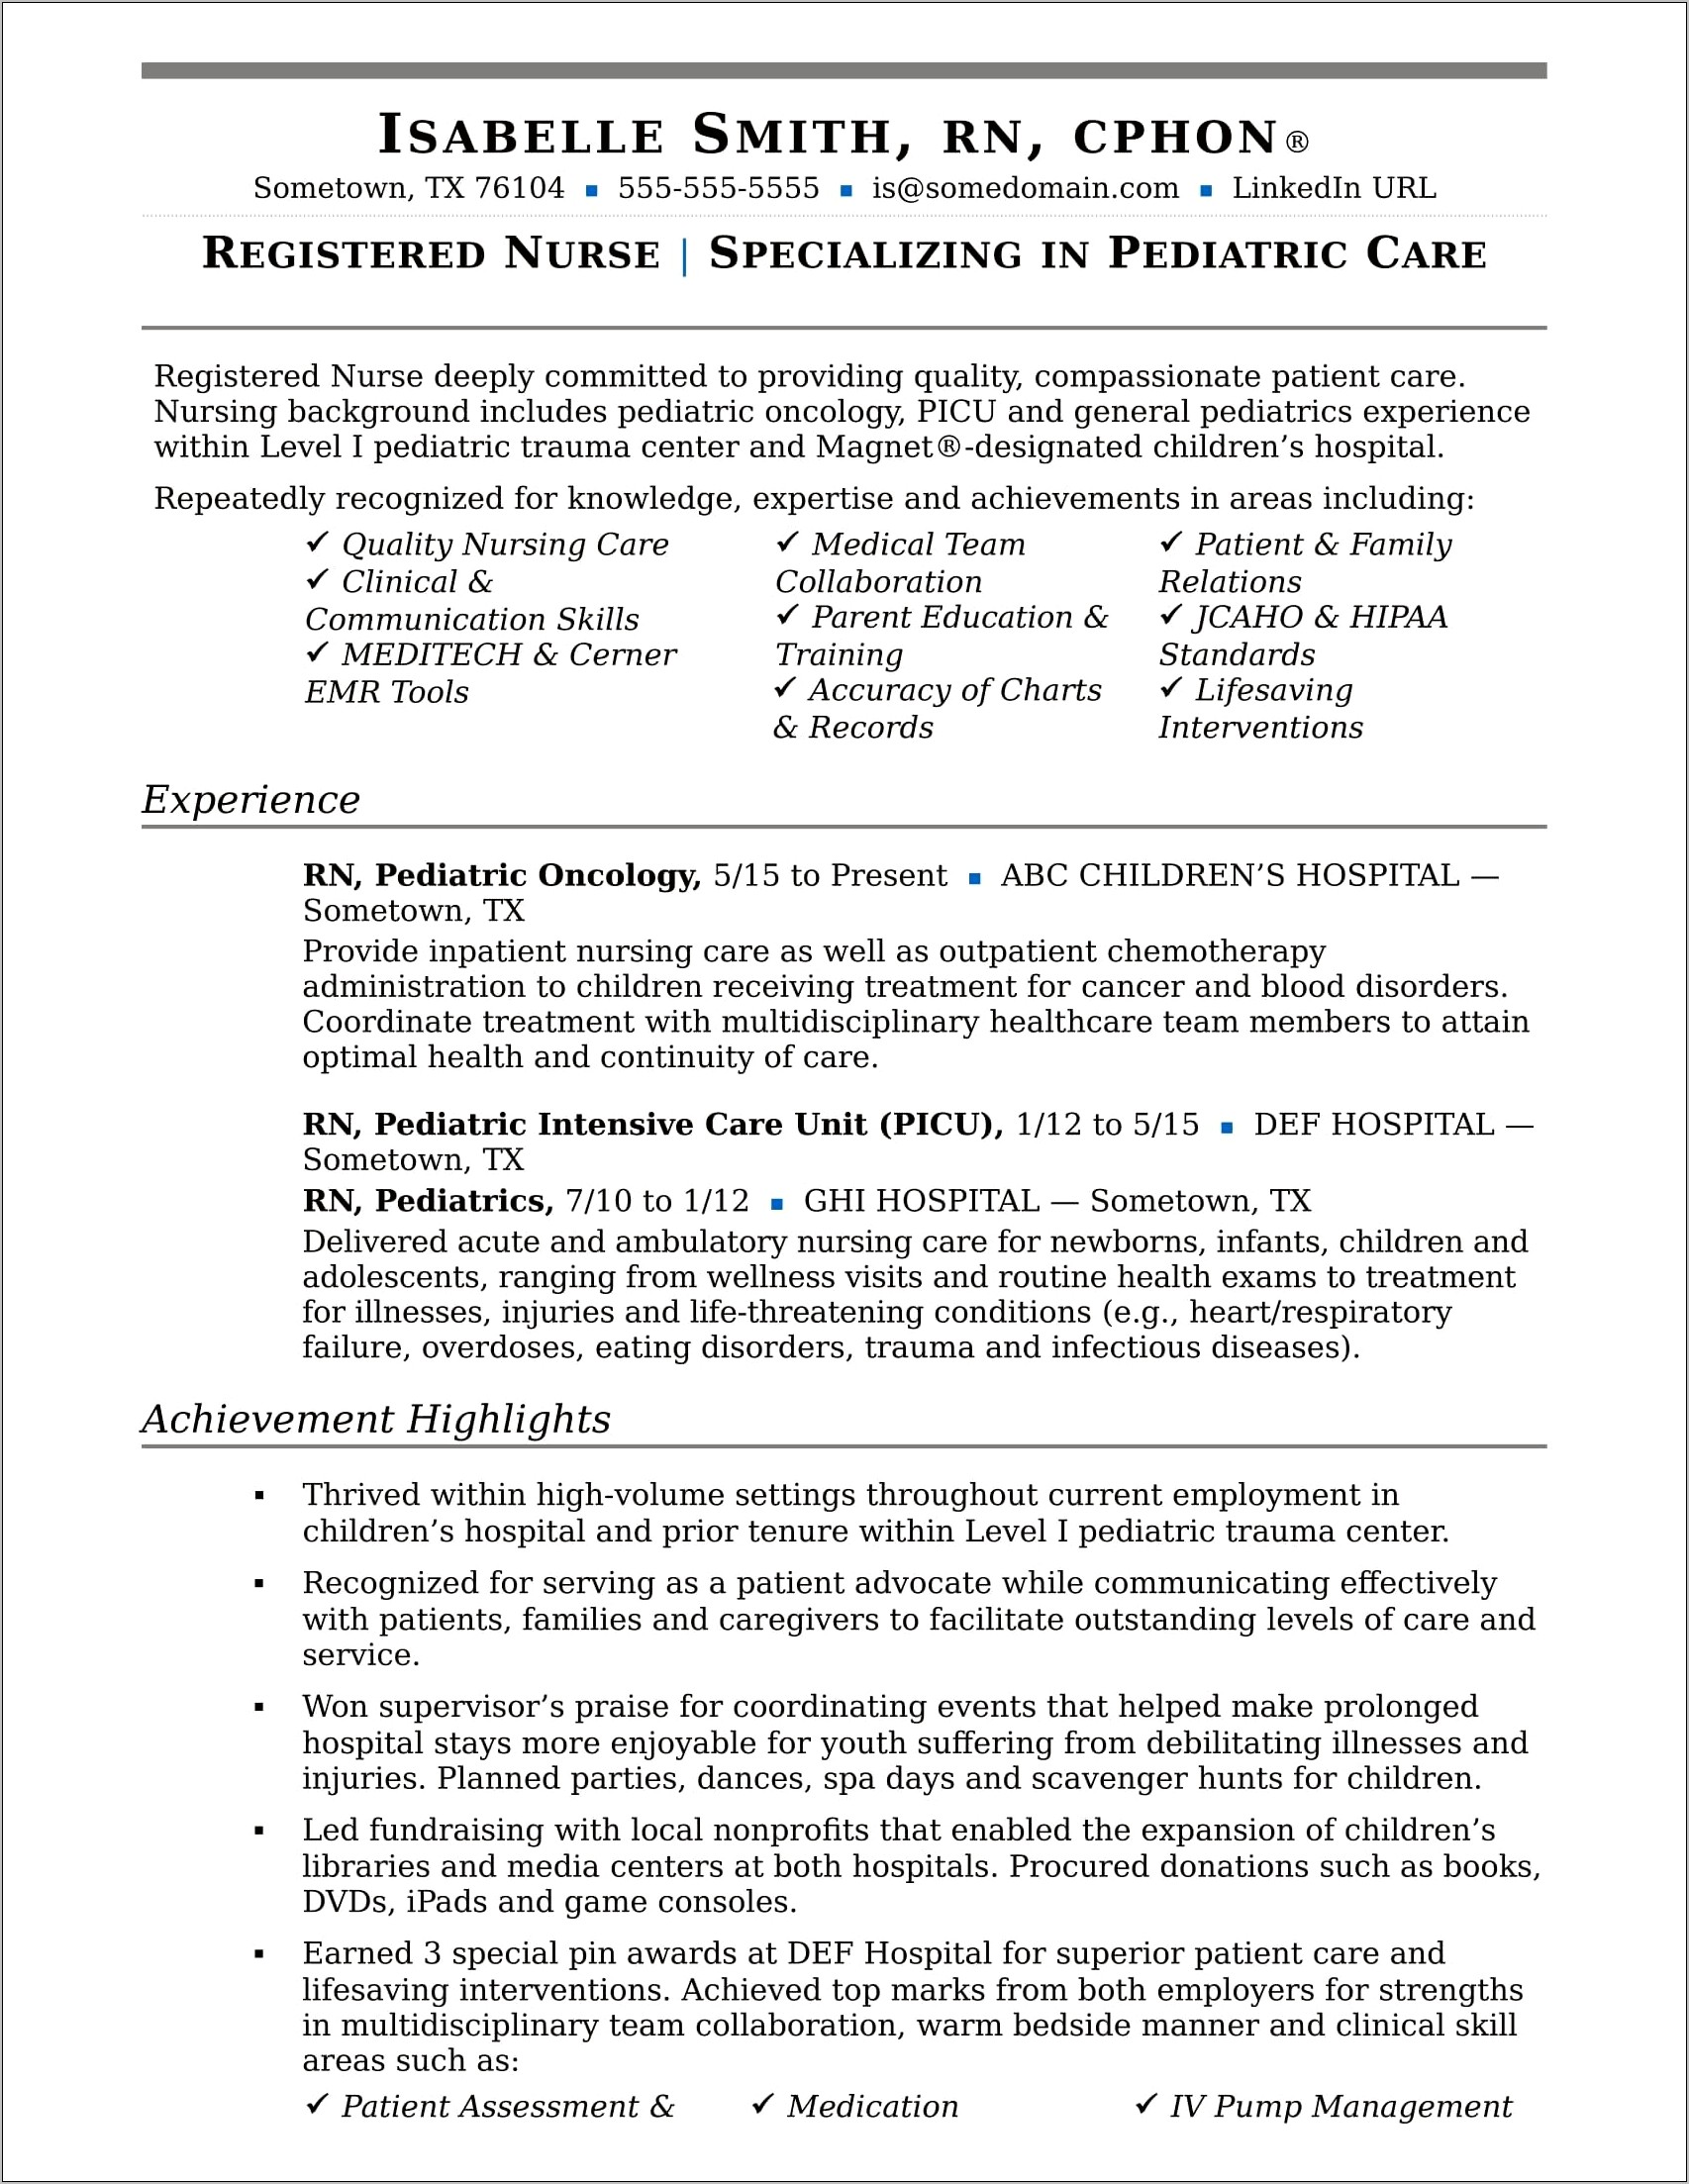 Sample Career Profile Resume For Nurses